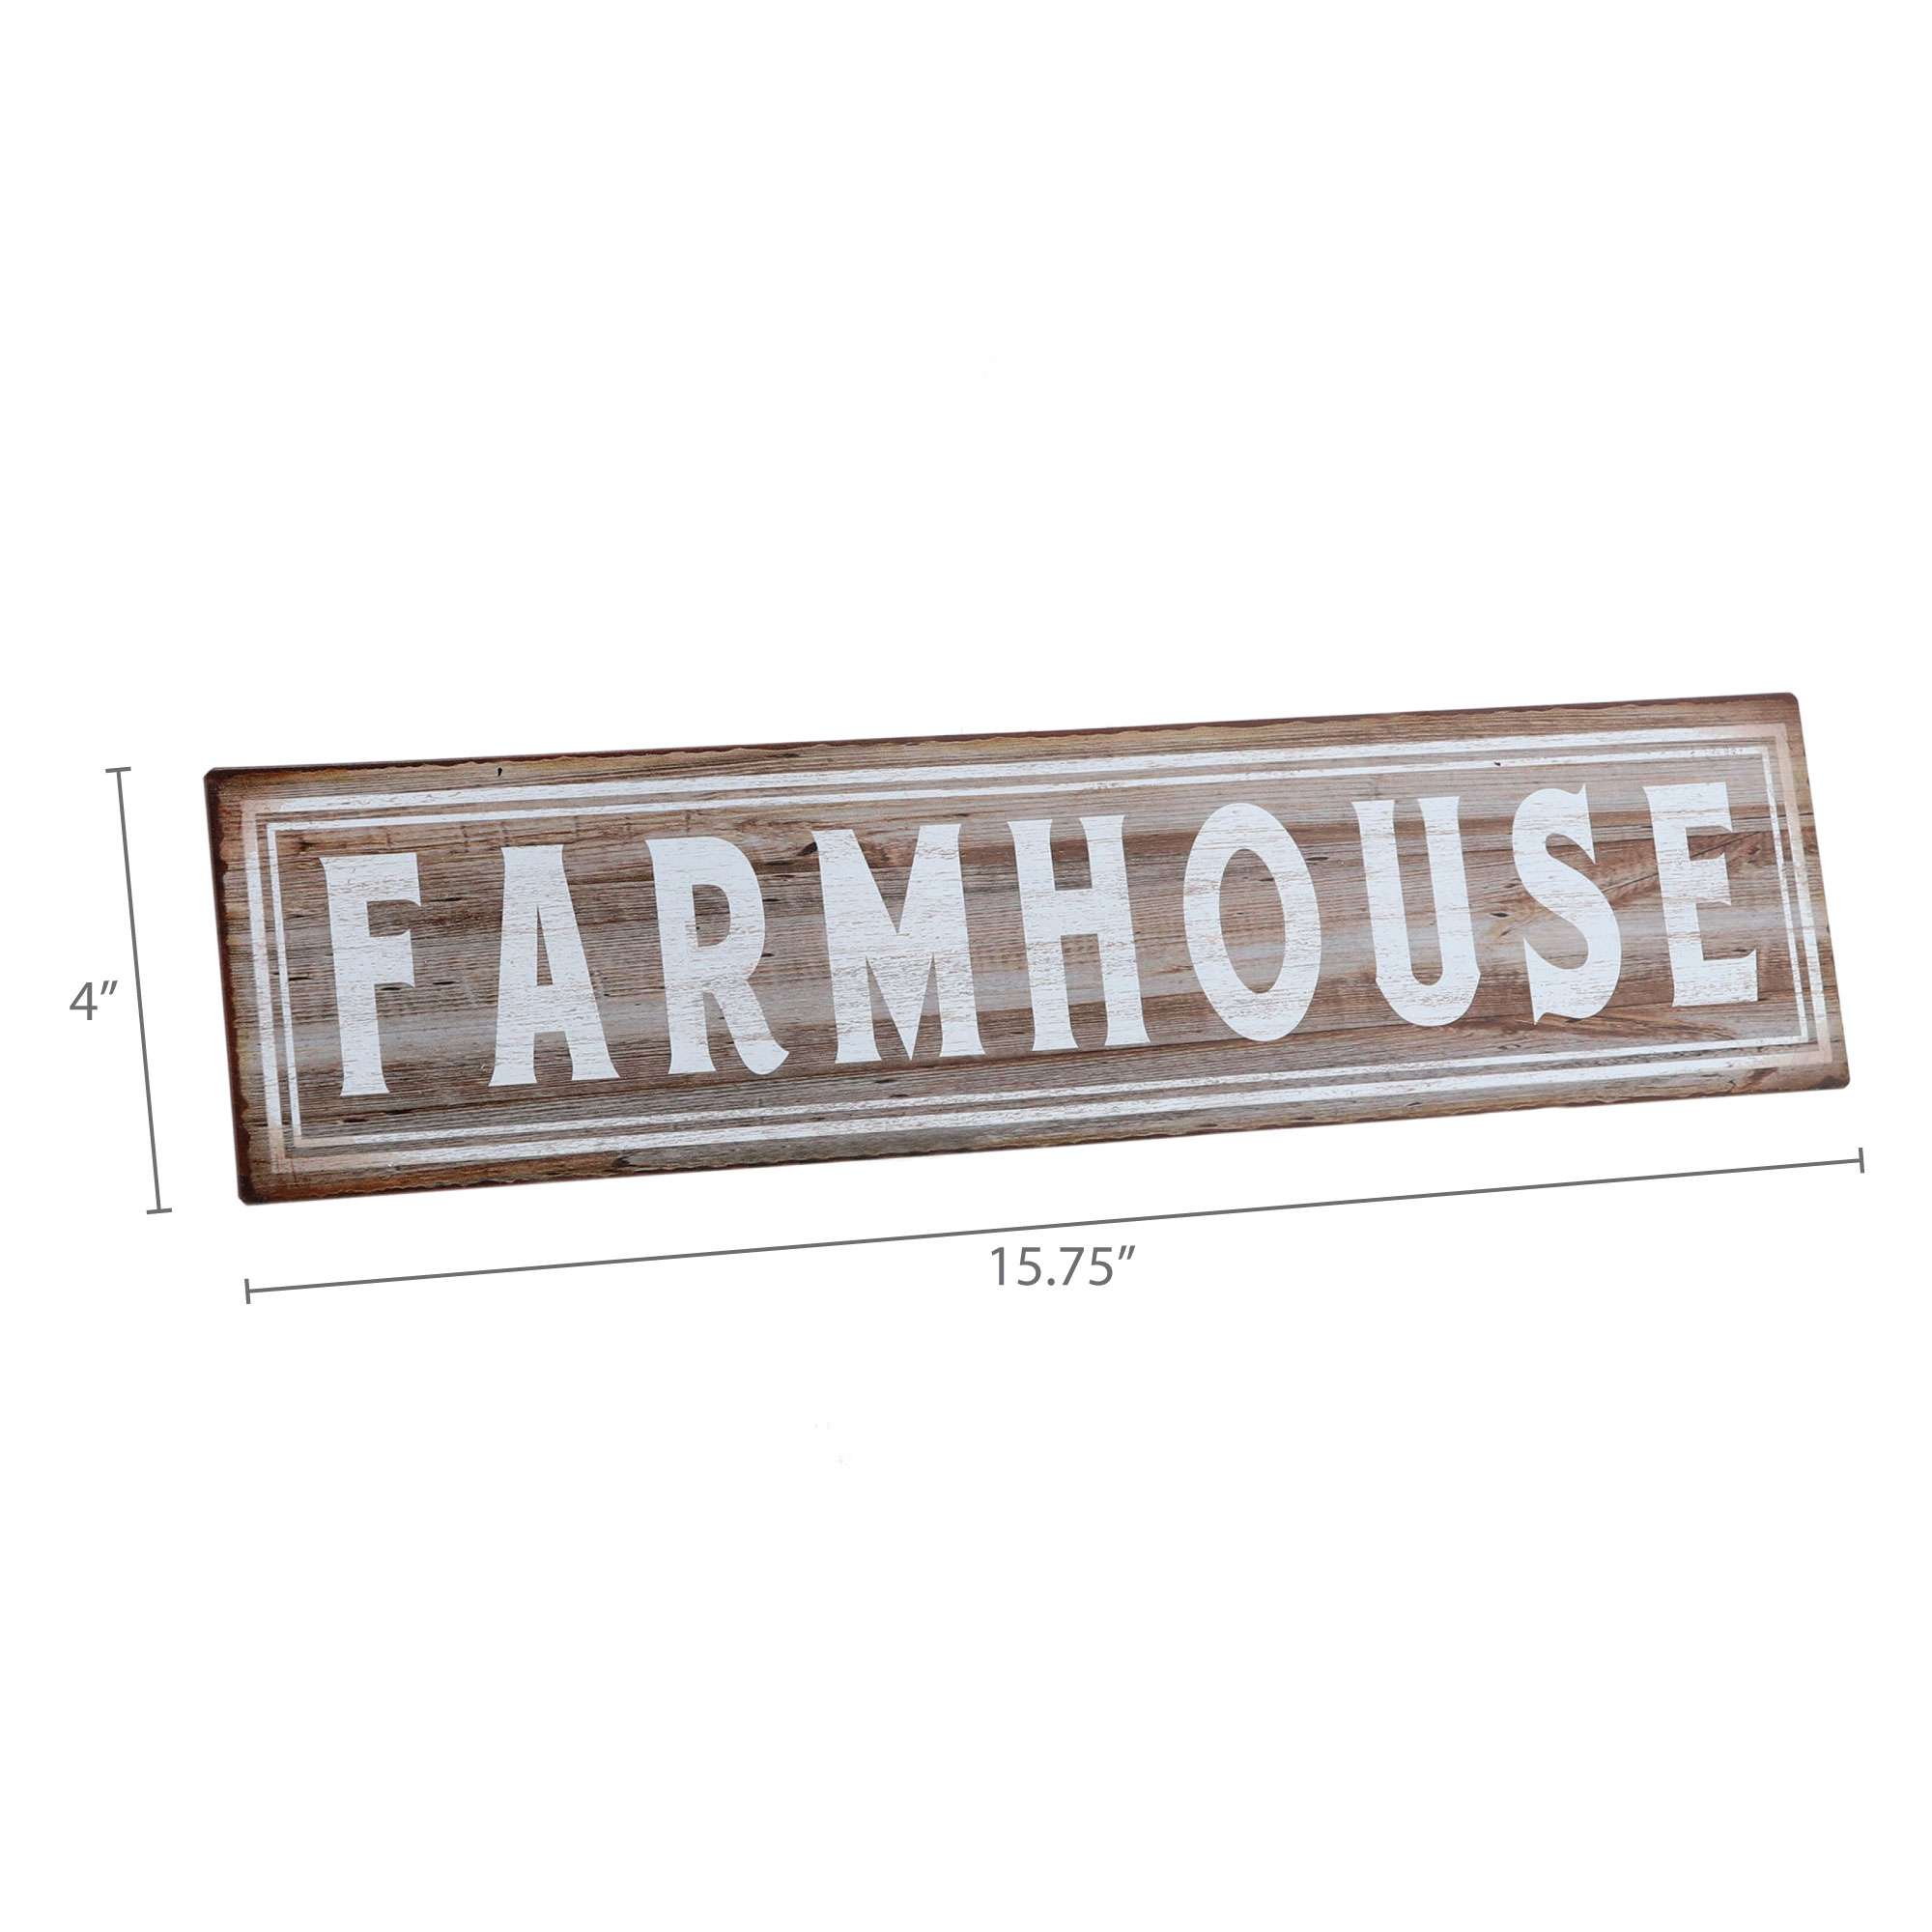 Barnyard Designs Farmhouse Retro Vintage Metal Tin Bar Sign, Decorative Wall Art Signage, Primitive Farmhouse Country Kitchen Home Décor, 15.75" x 4" - image 3 of 6